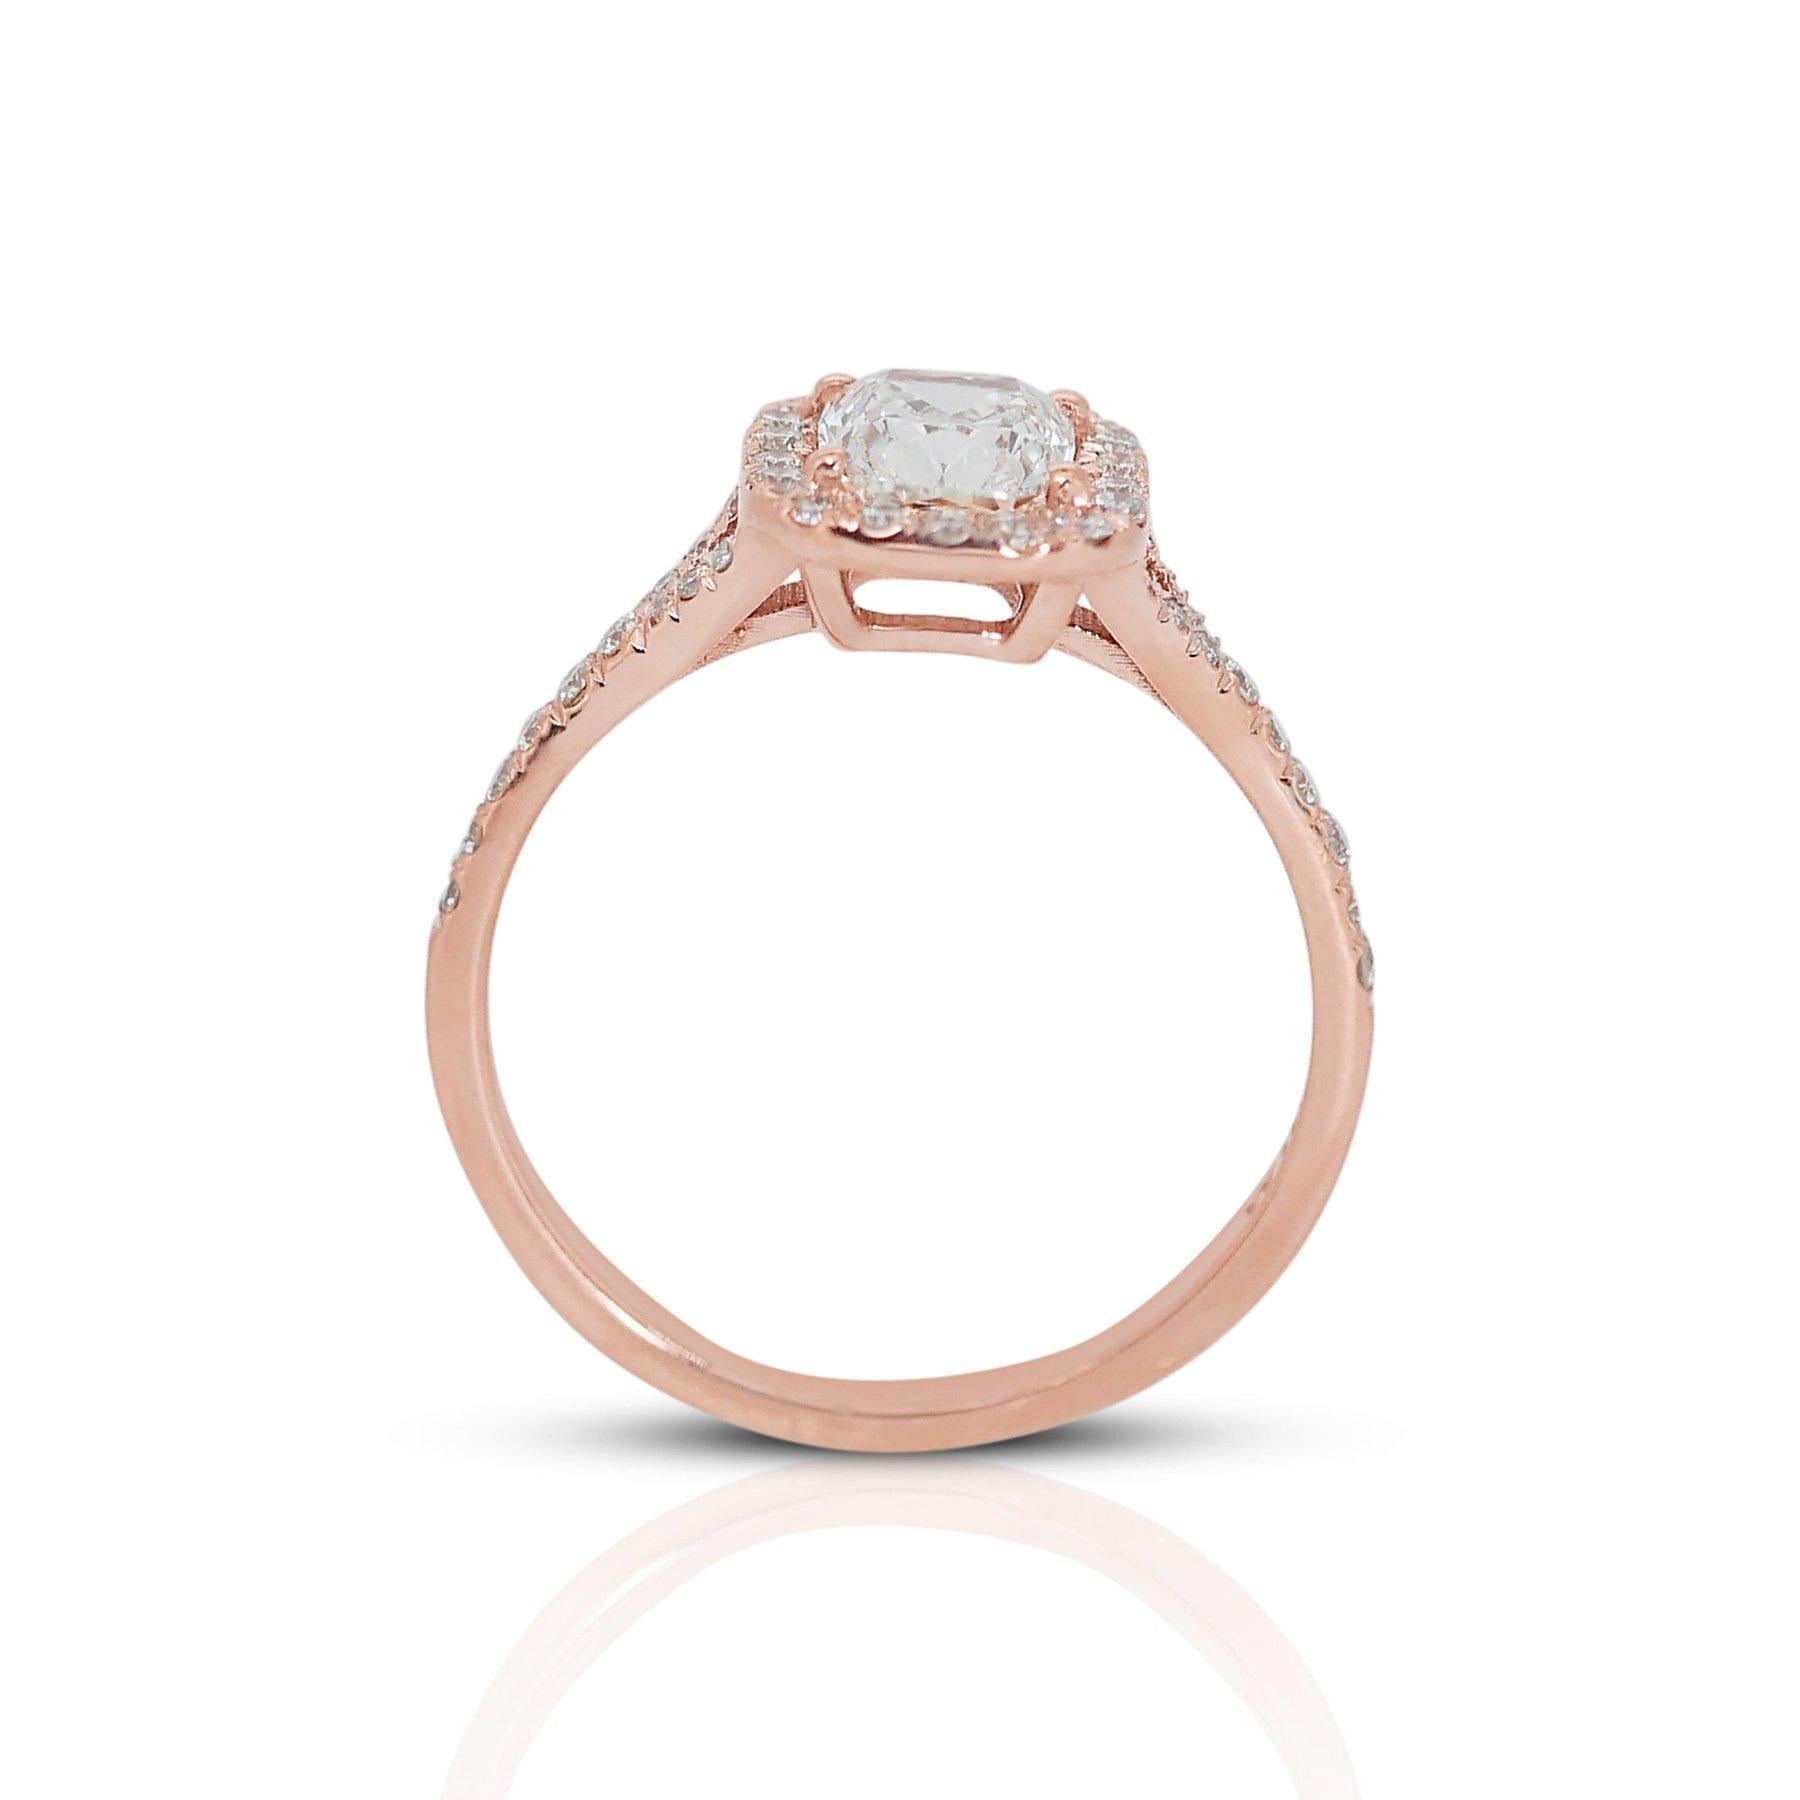 Elegant 1.28ct Diamond Halo Ring in 18k Rose Gold – GIA Certified For Sale 1